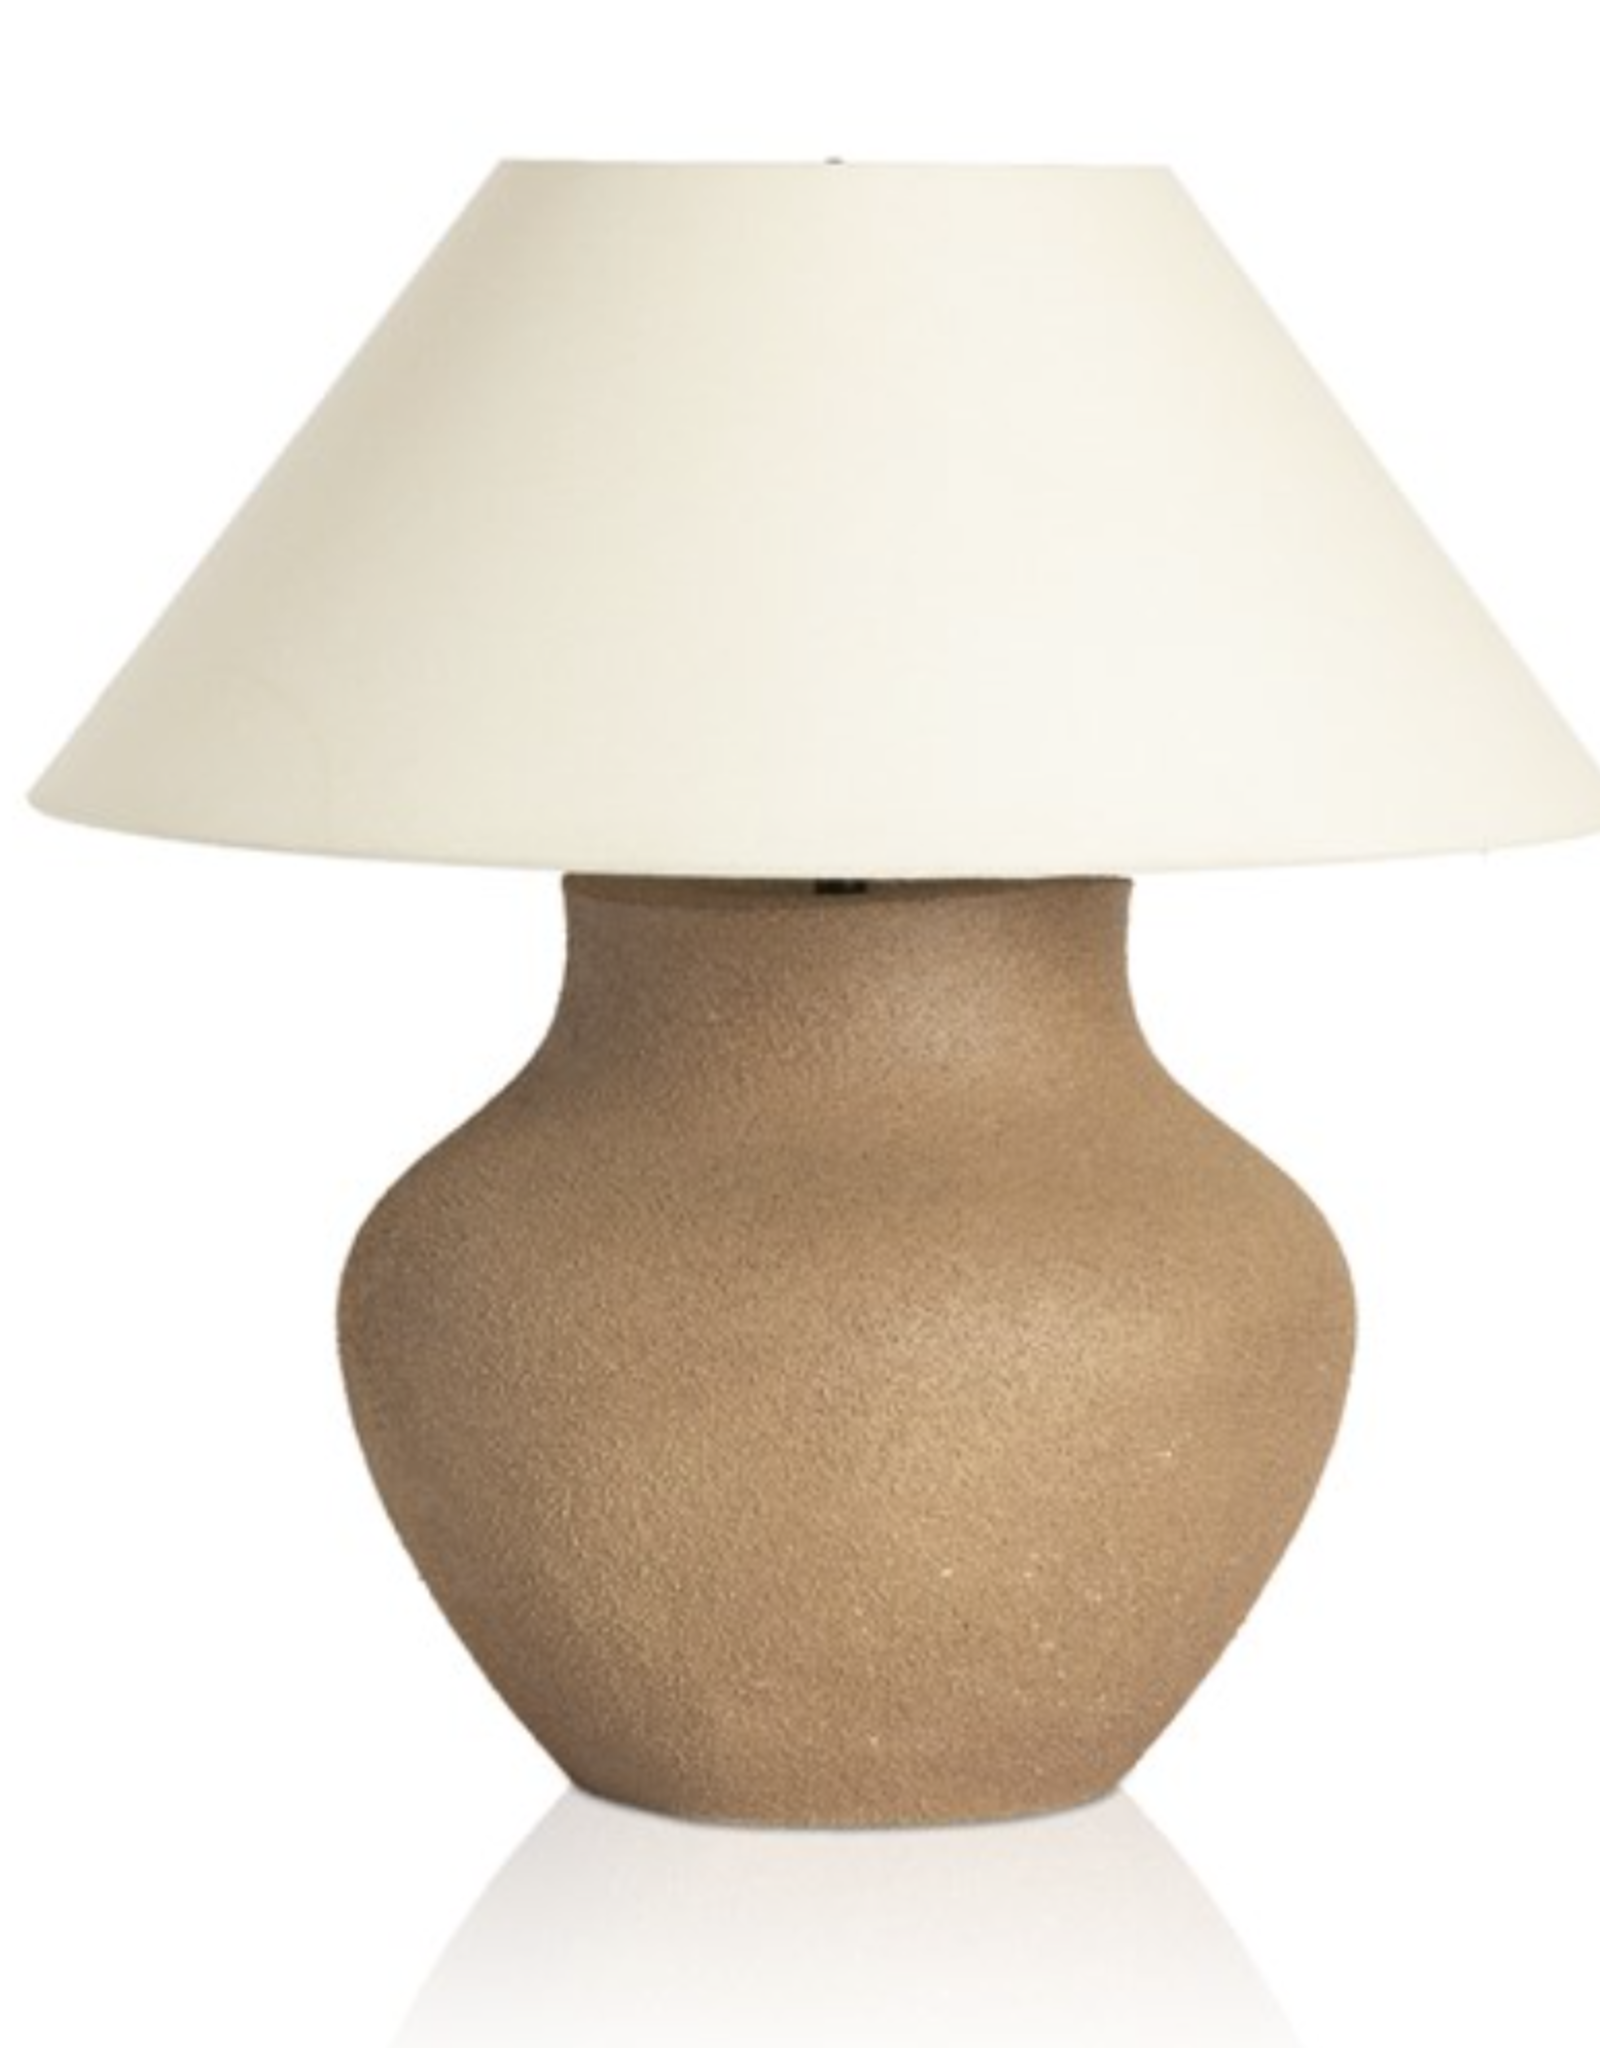 Parma Ceramic Table Lamp, Dark Sand